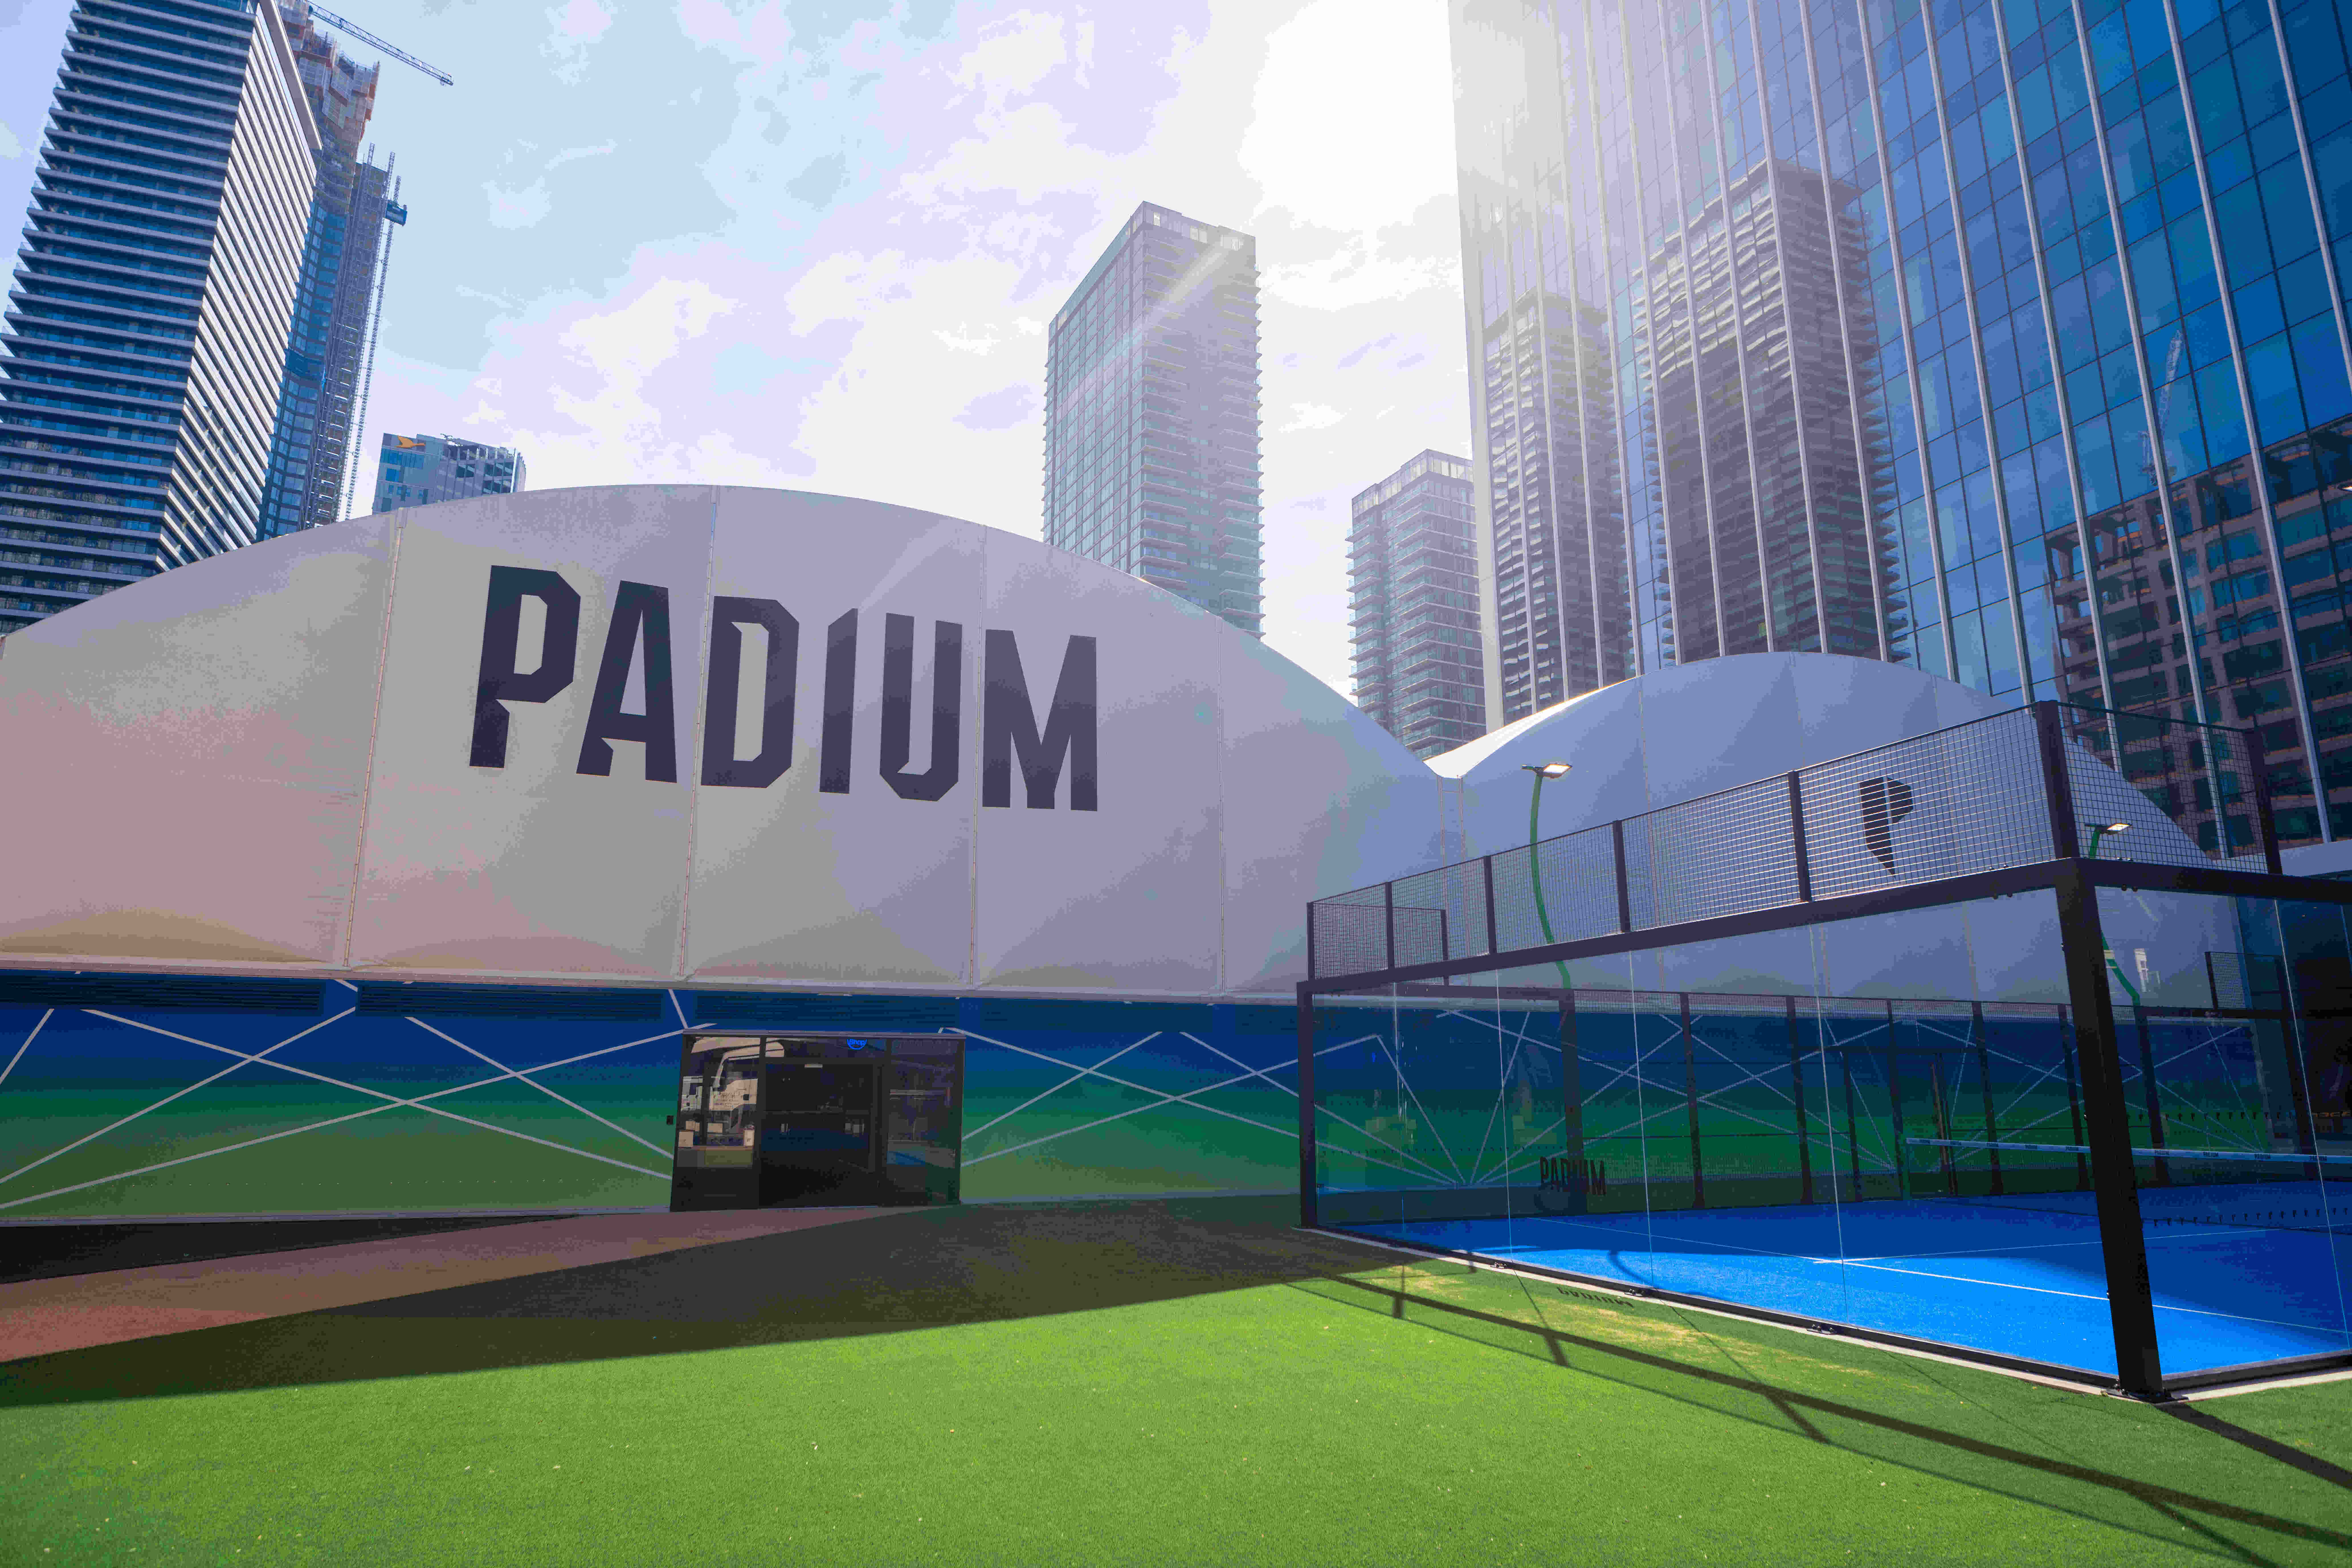 Padel Tennis at Padium - Canary Wharf